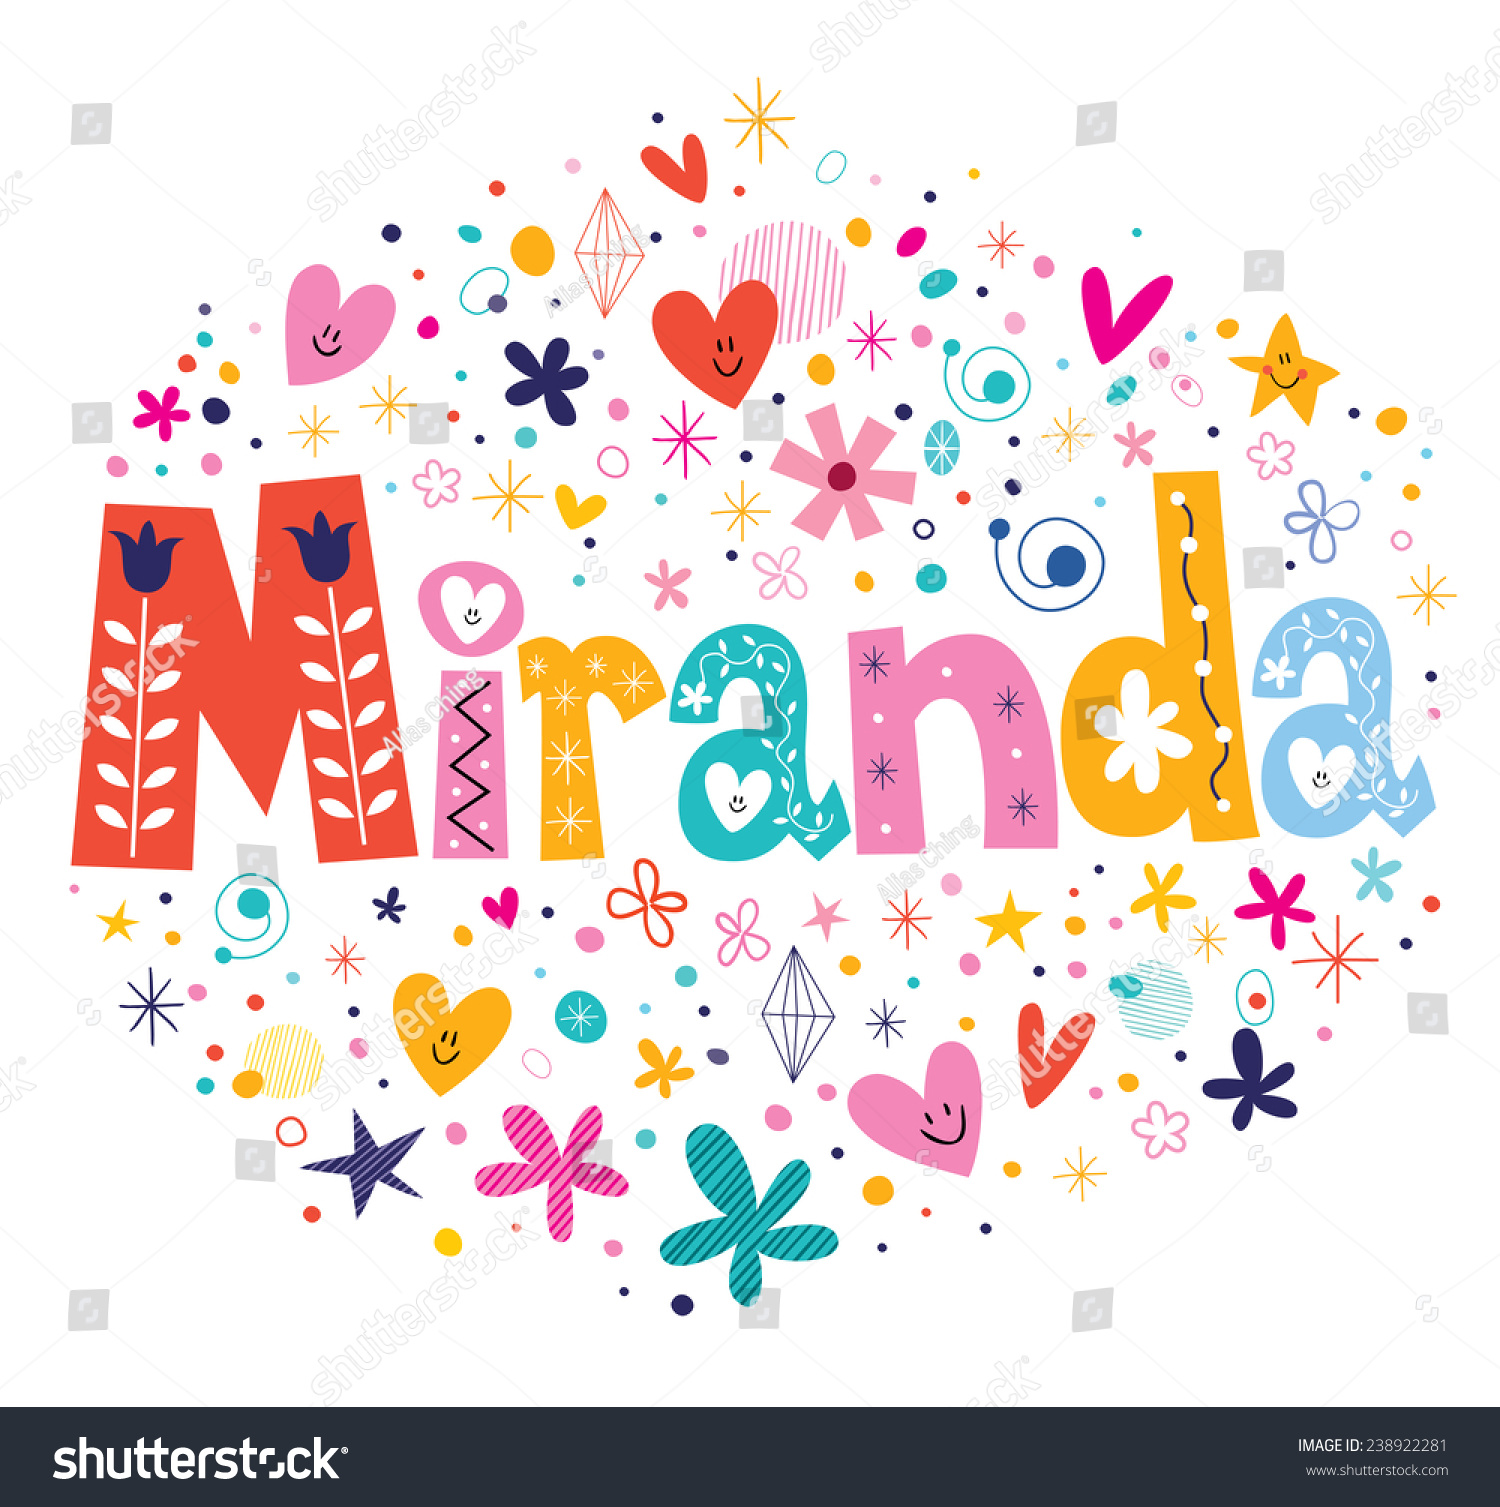 29 Miranda name Images, Stock Photos & Vectors | Shutterstock